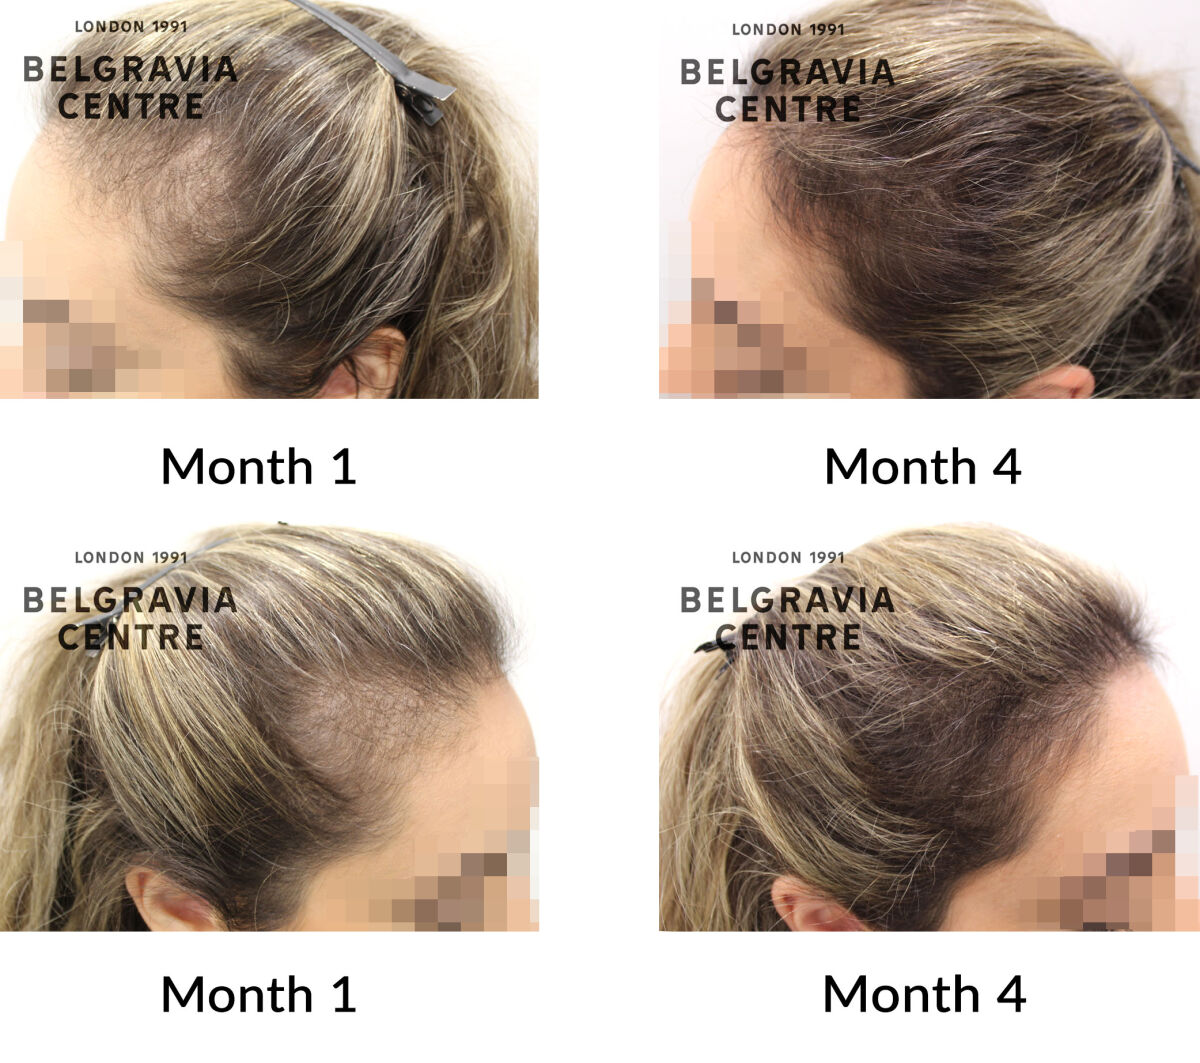 female pattern hair loss the belgravia centre 412583